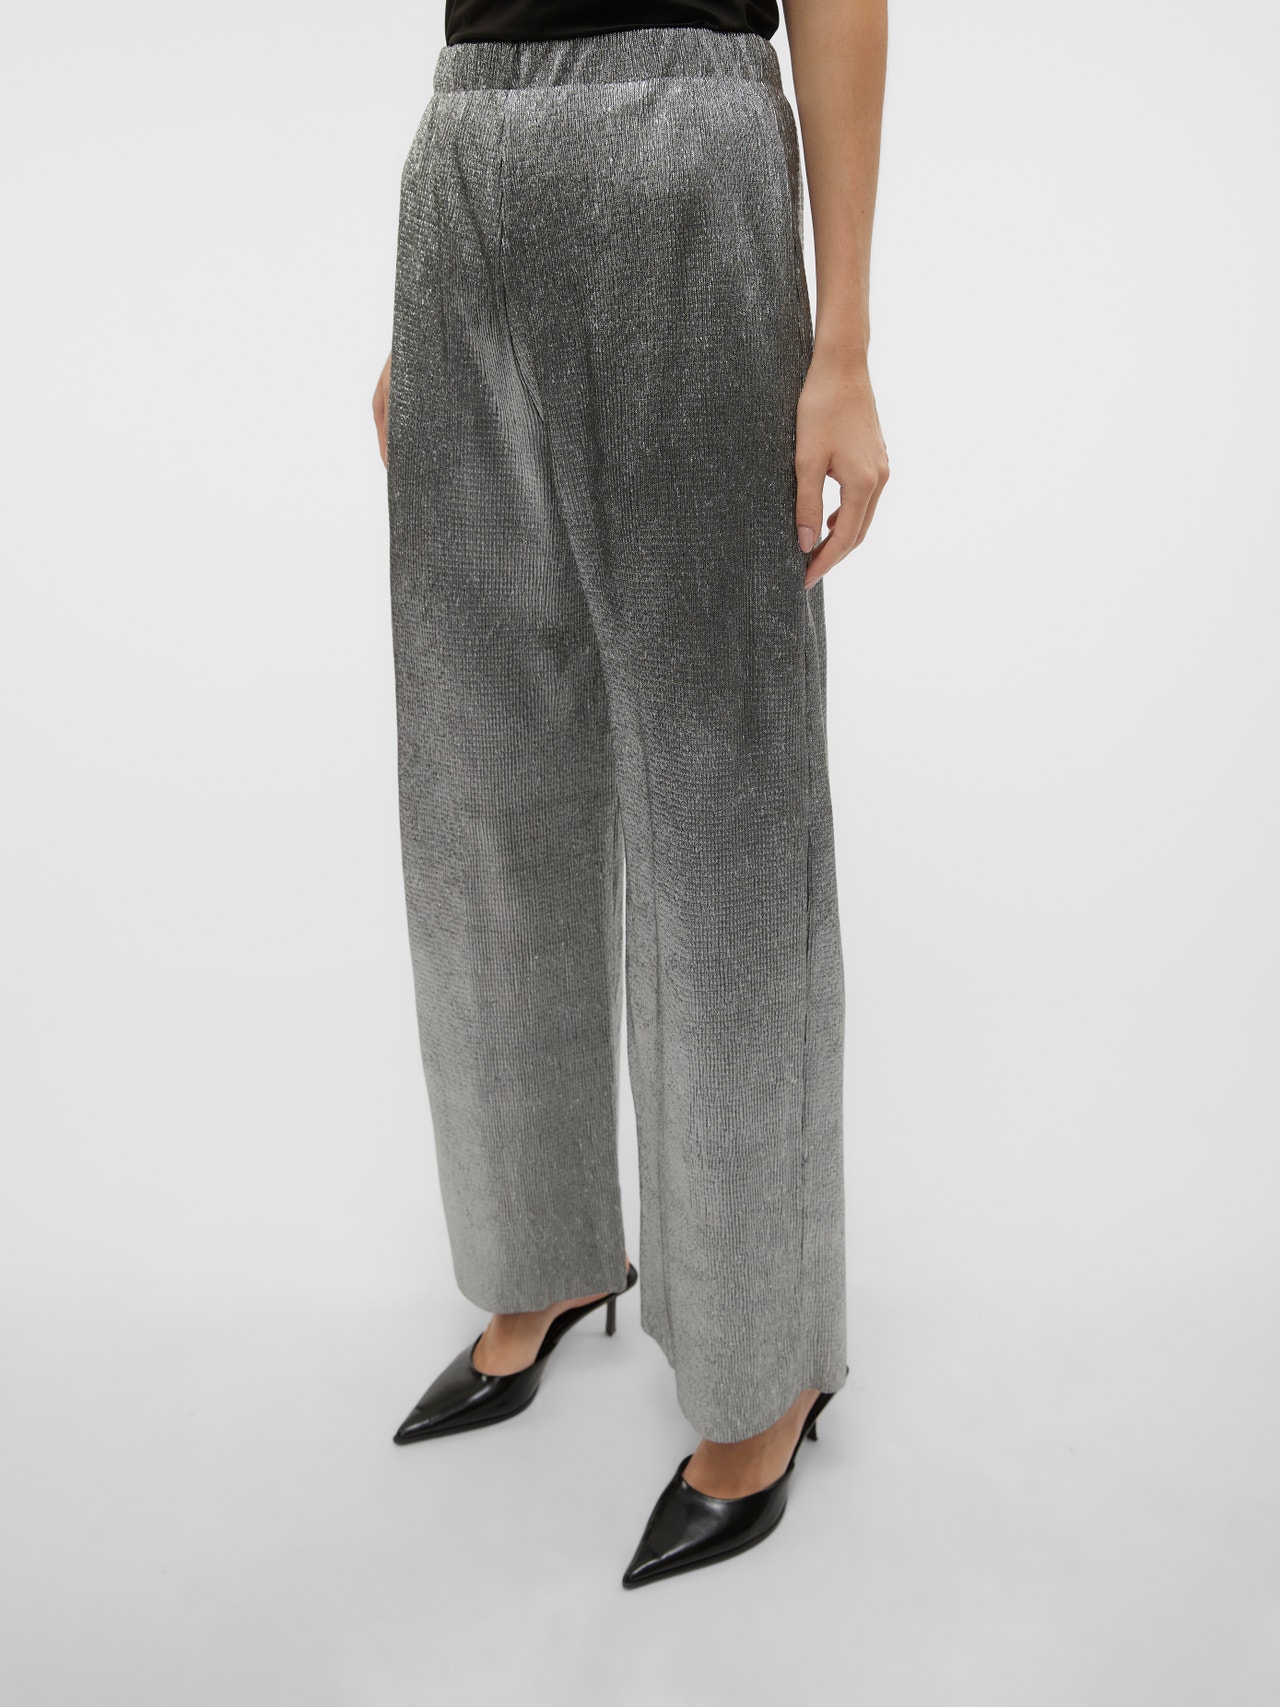 Vero Moda VMFELINE Trousers -Silver - 10305250